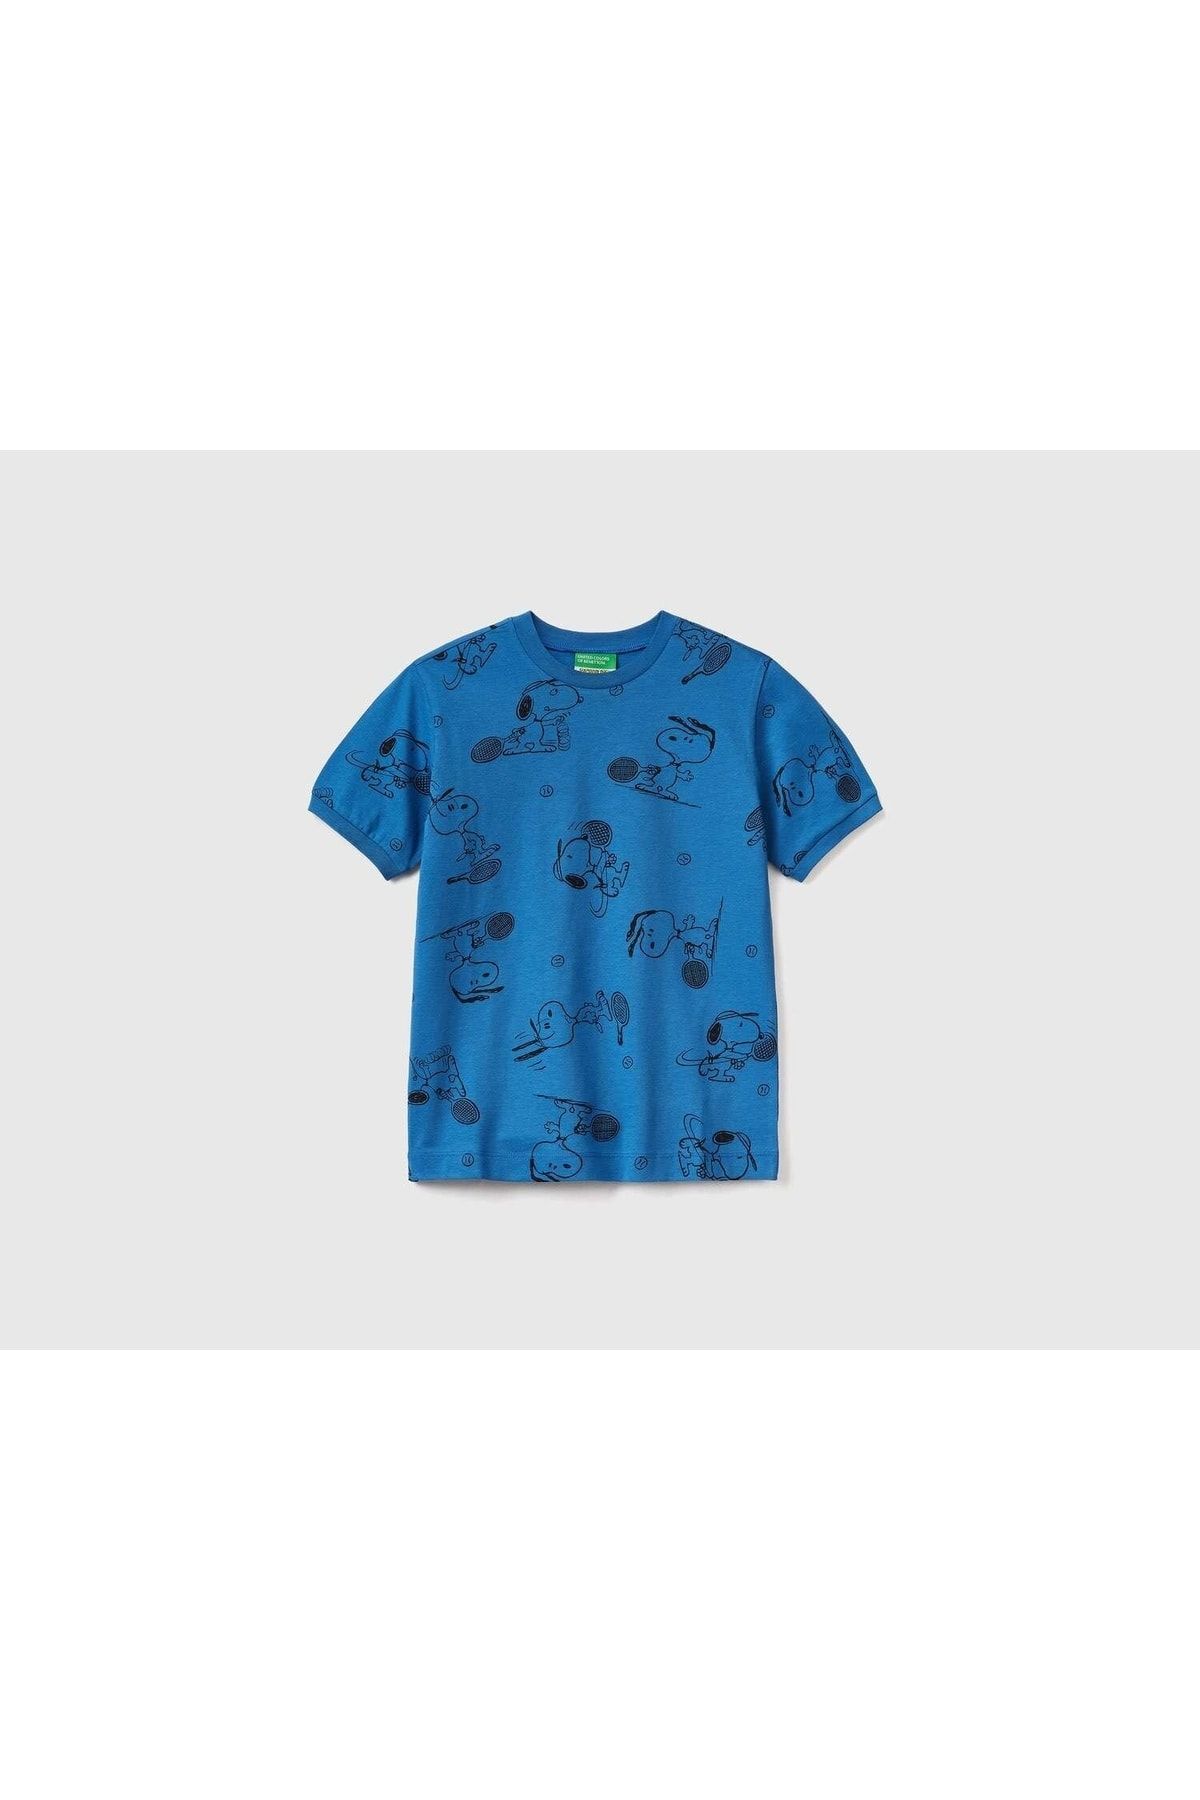 United Colors of Benetton Erkek Çocuk Mavi Mix Snoopy Desenli T-shirt